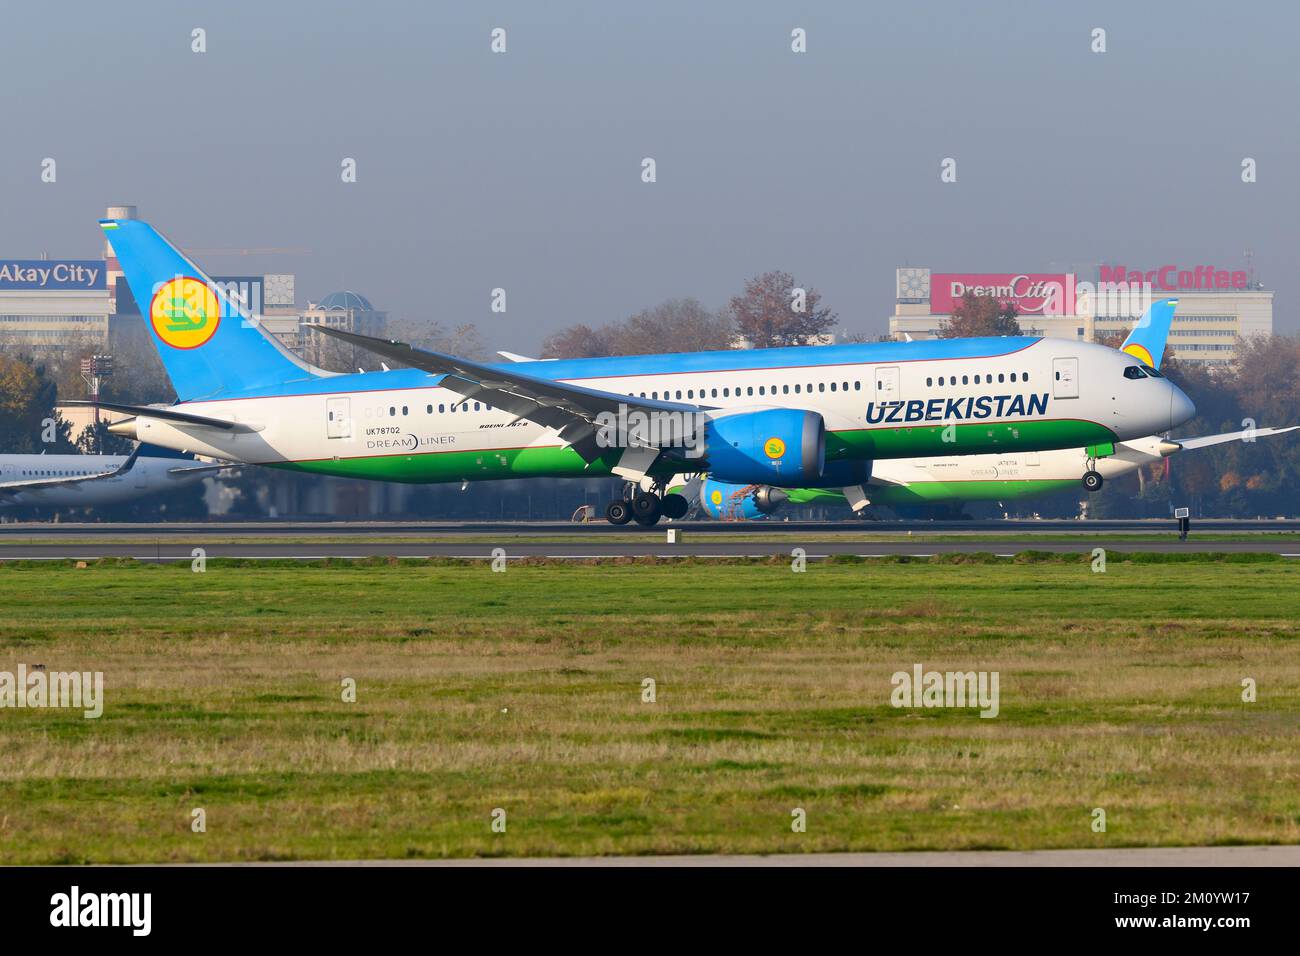 Uzbekistan Airways Boeing 787 airplane landing at Tashkent Airport. Aircraft of UZ Airways arrival. Plane B787 Dreamliner registered as UK78702. Stock Photo